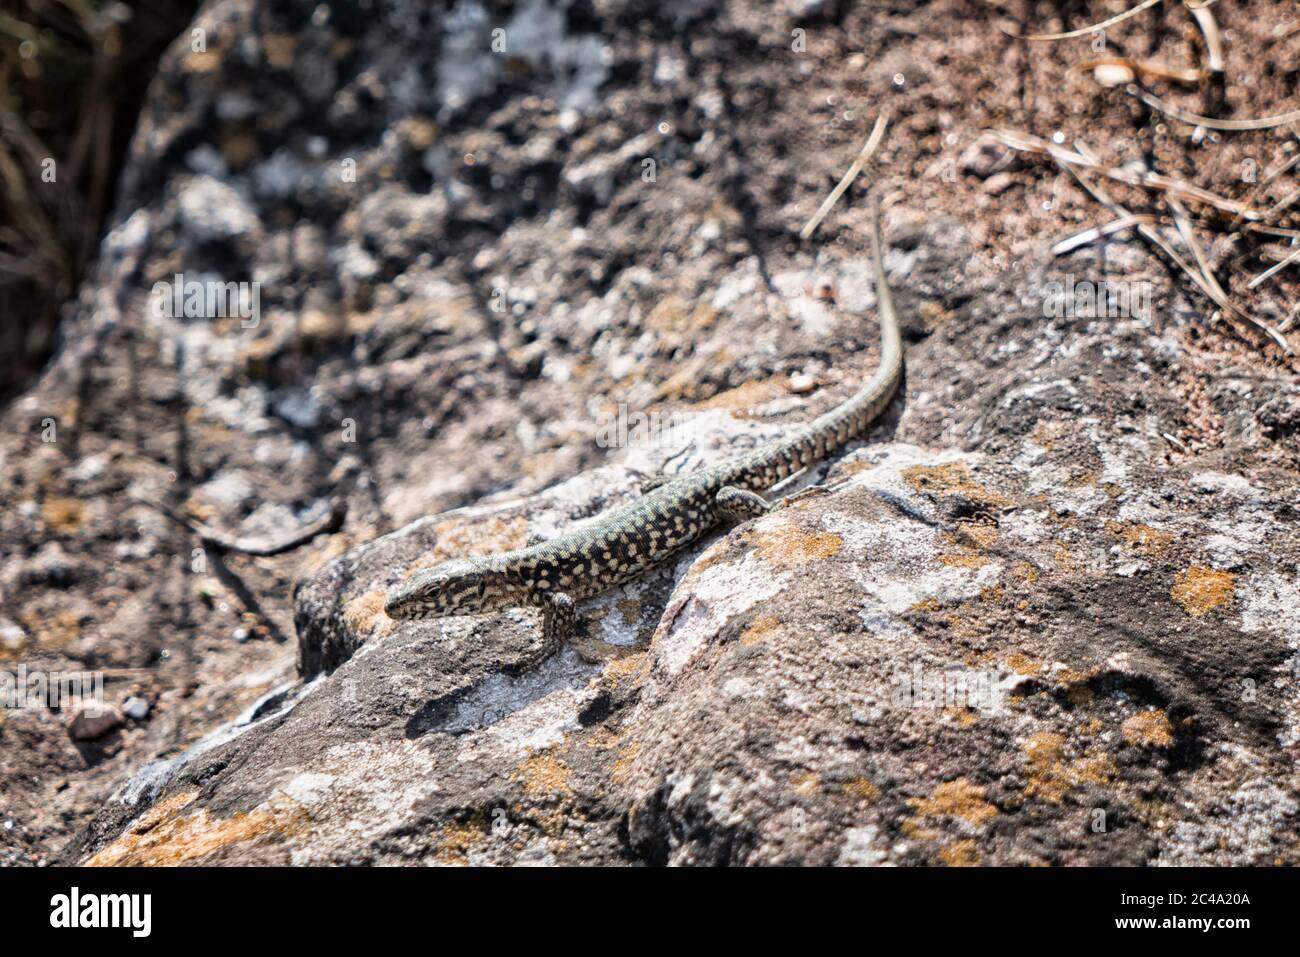 A Common Wall Lizard (Podarcis muralis) enjoys the sun. Stock Photo